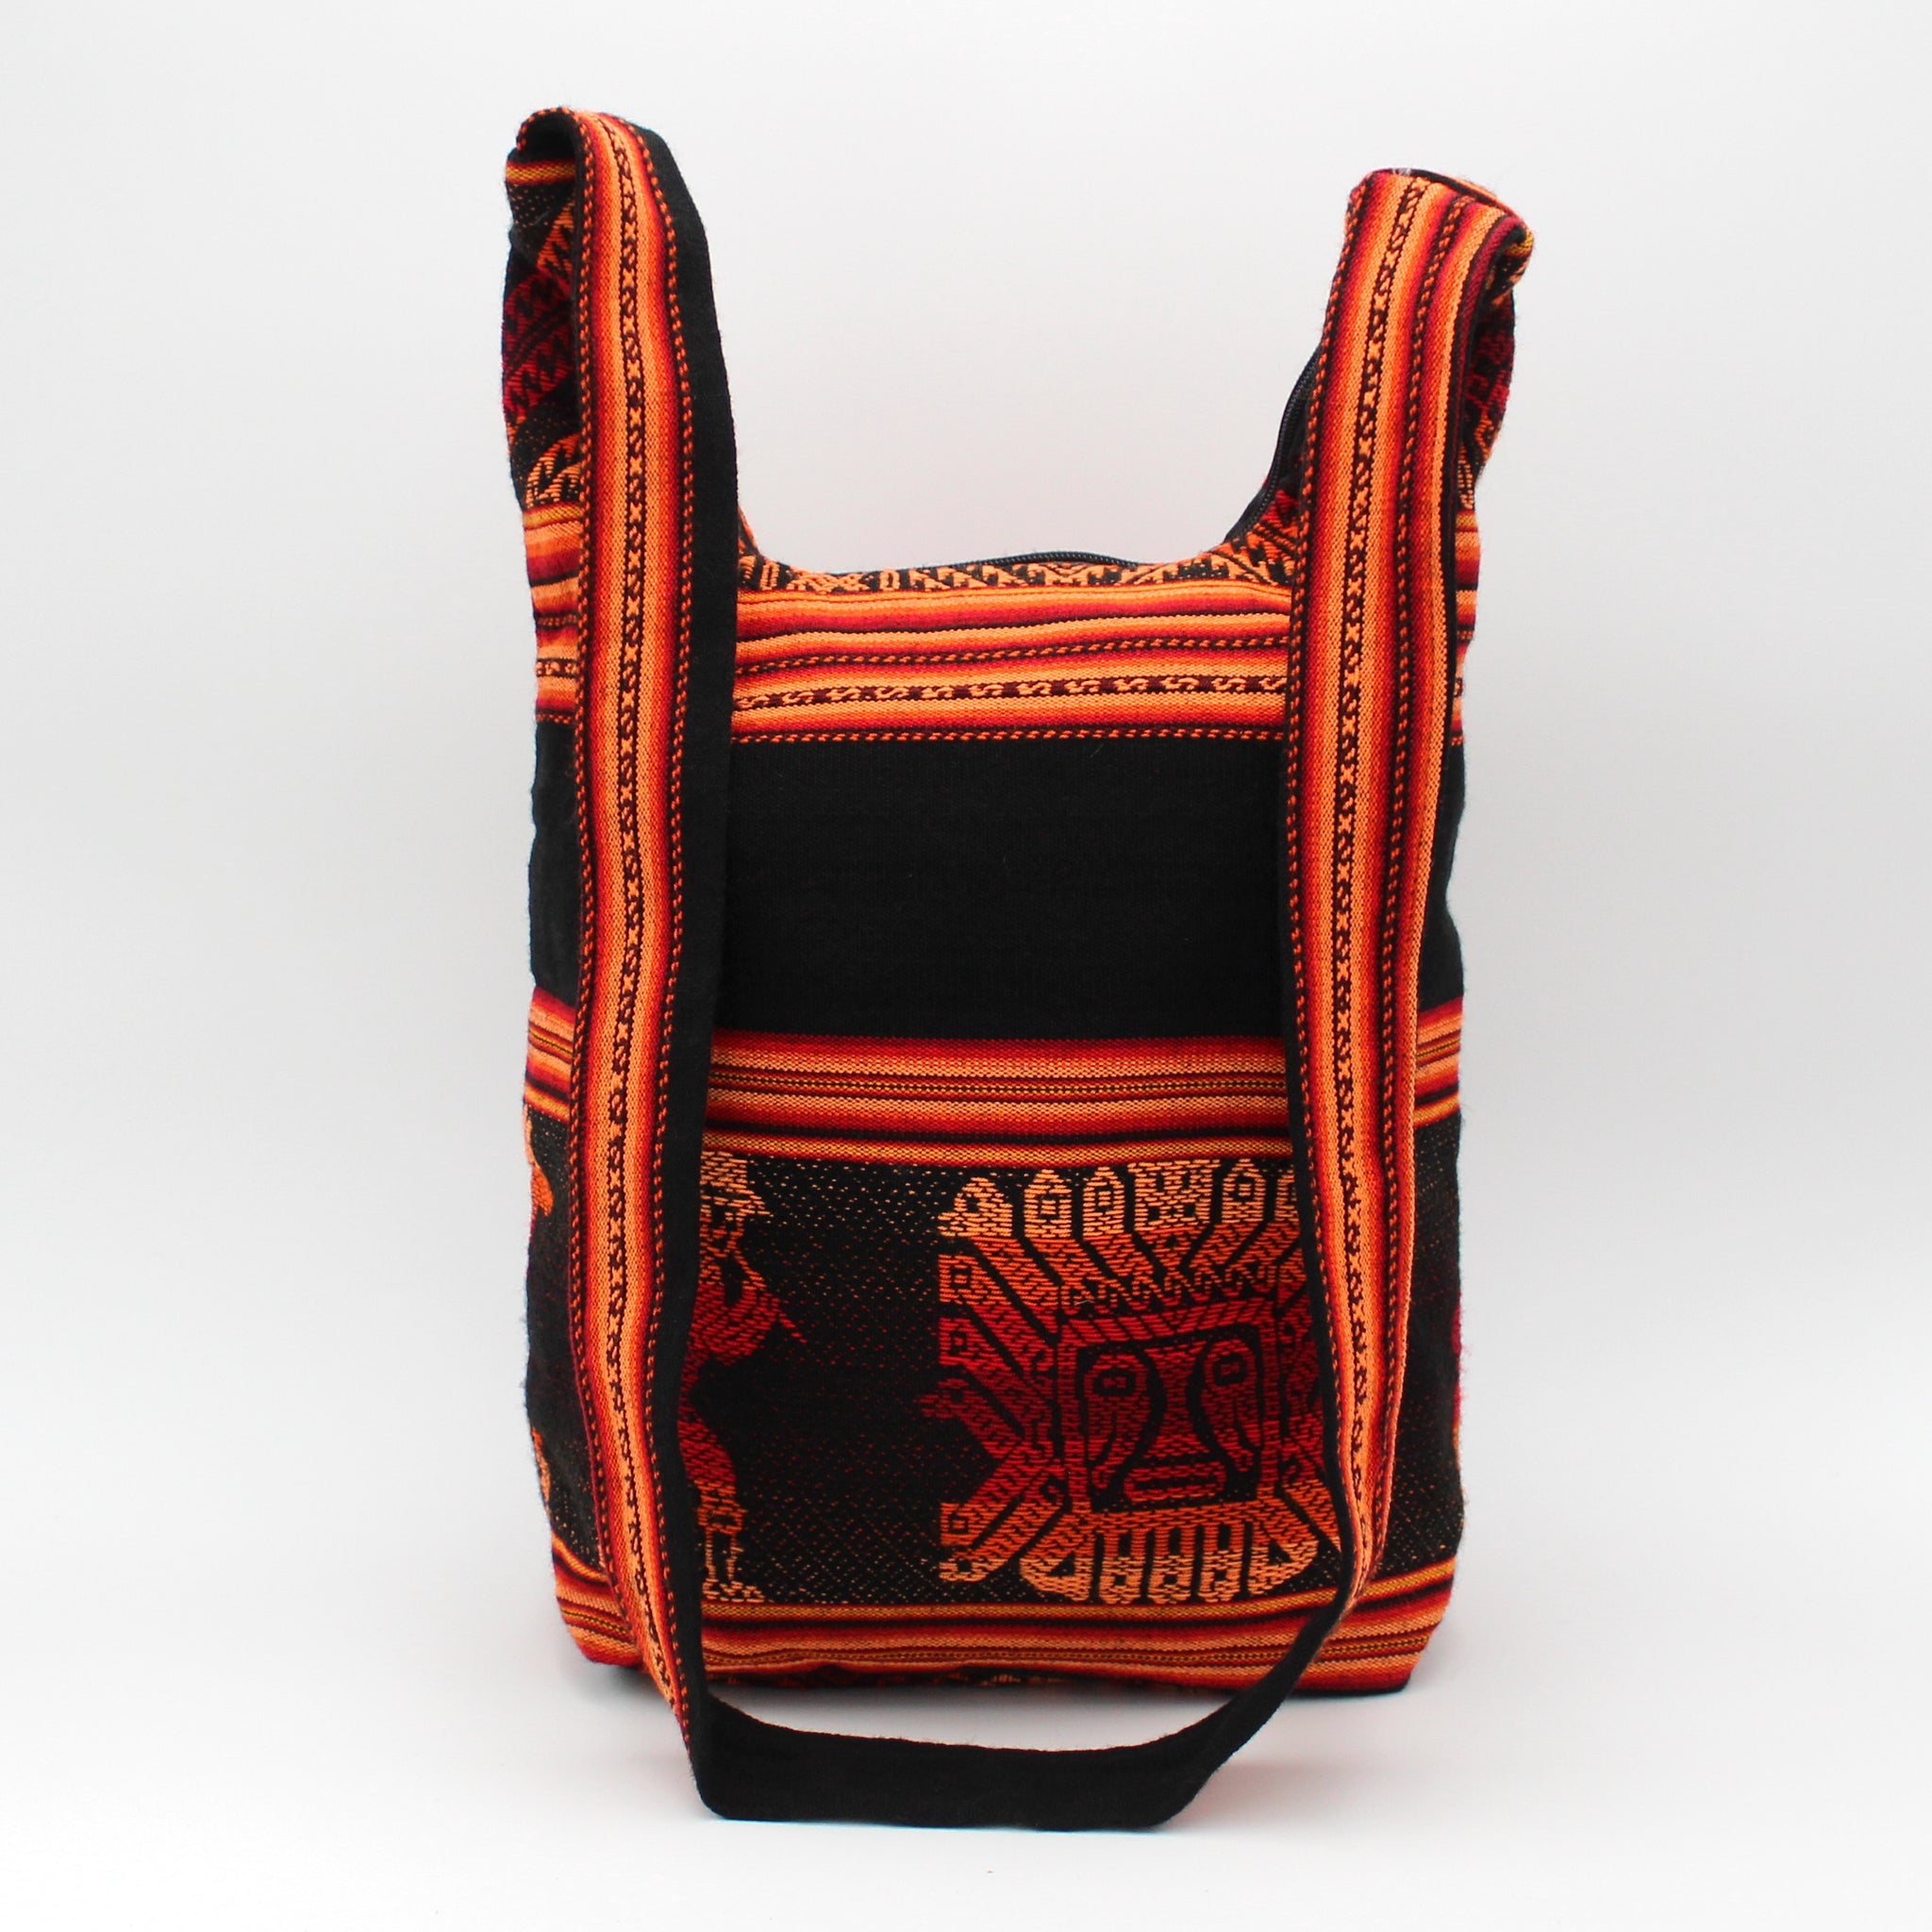 Aguayo Crossbody Bag - Incan Orange and Black